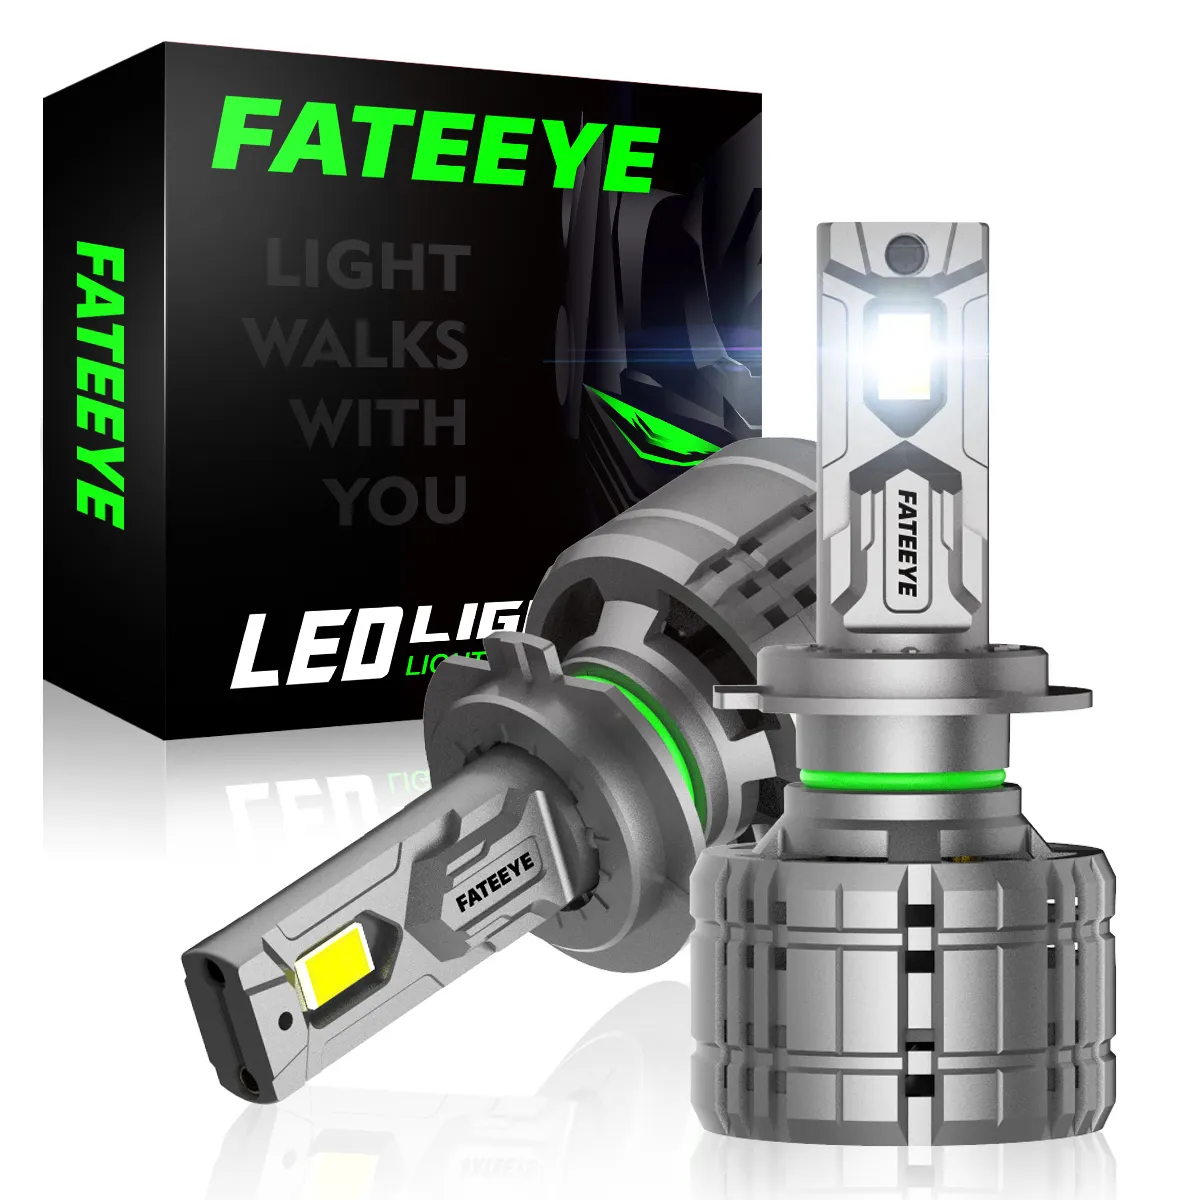 Fateeye 200W 40000Lm H11 H4 H7 9005 9006 bombilla de faro LED para coche Super brillante luz Led de coche 9006 Canbus accesorios para automóviles